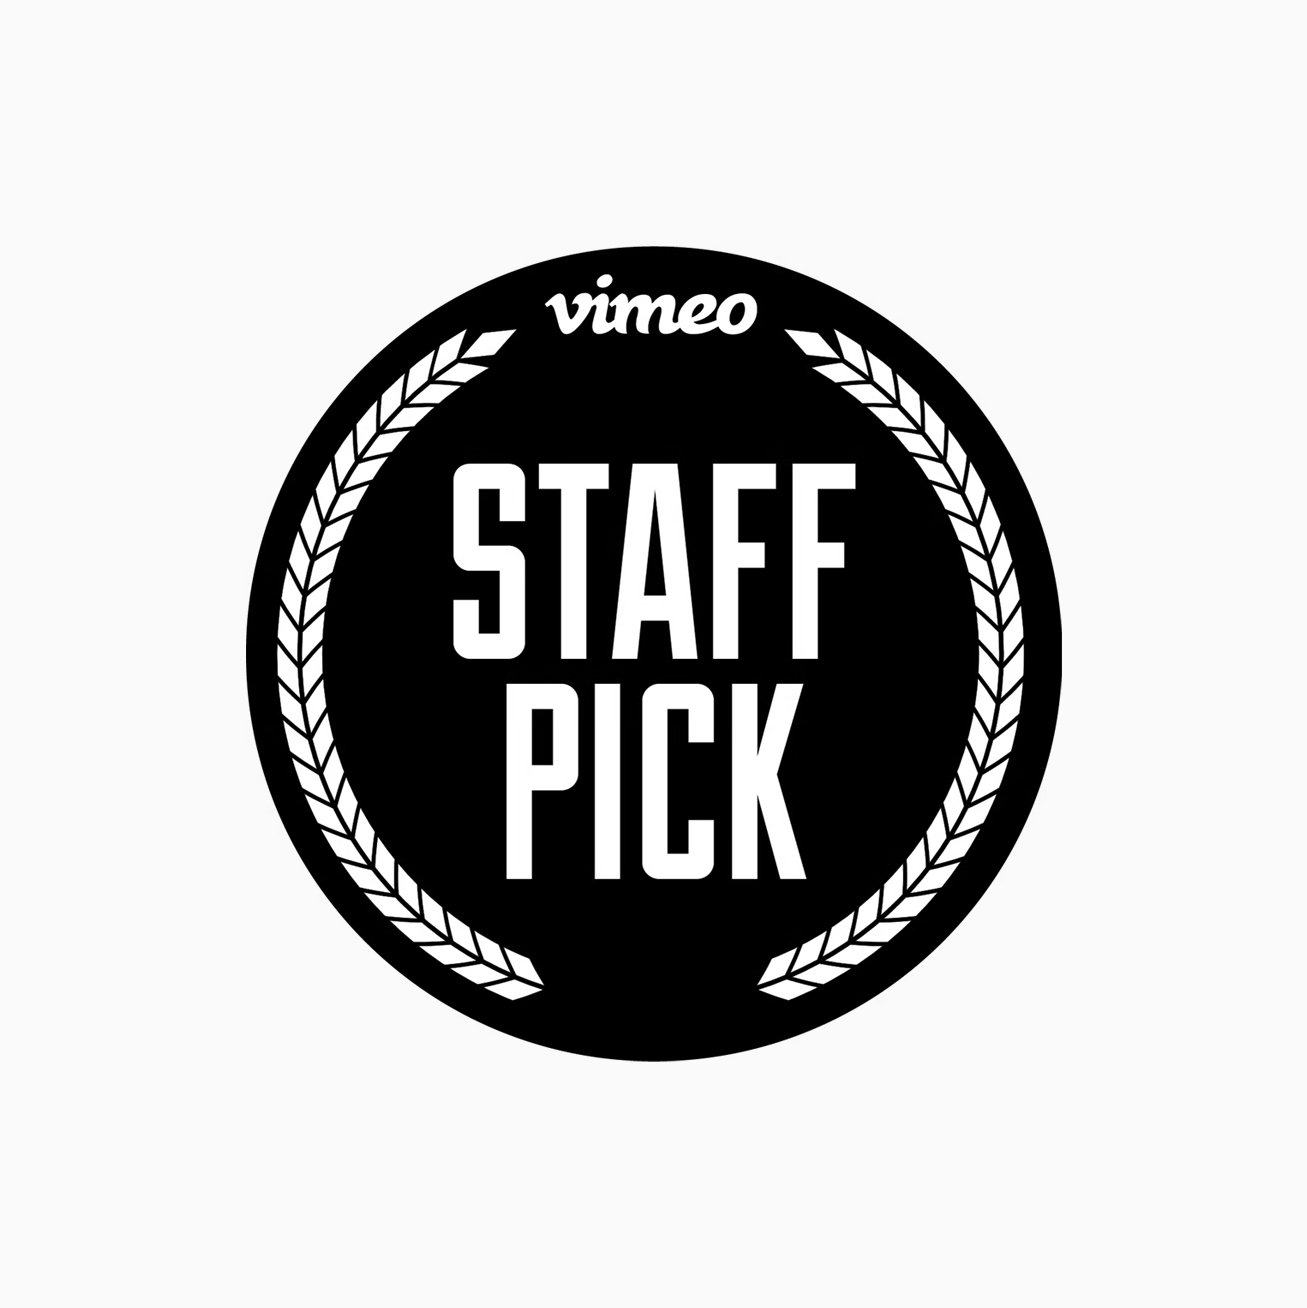 vimeo staff pick_small.jpg